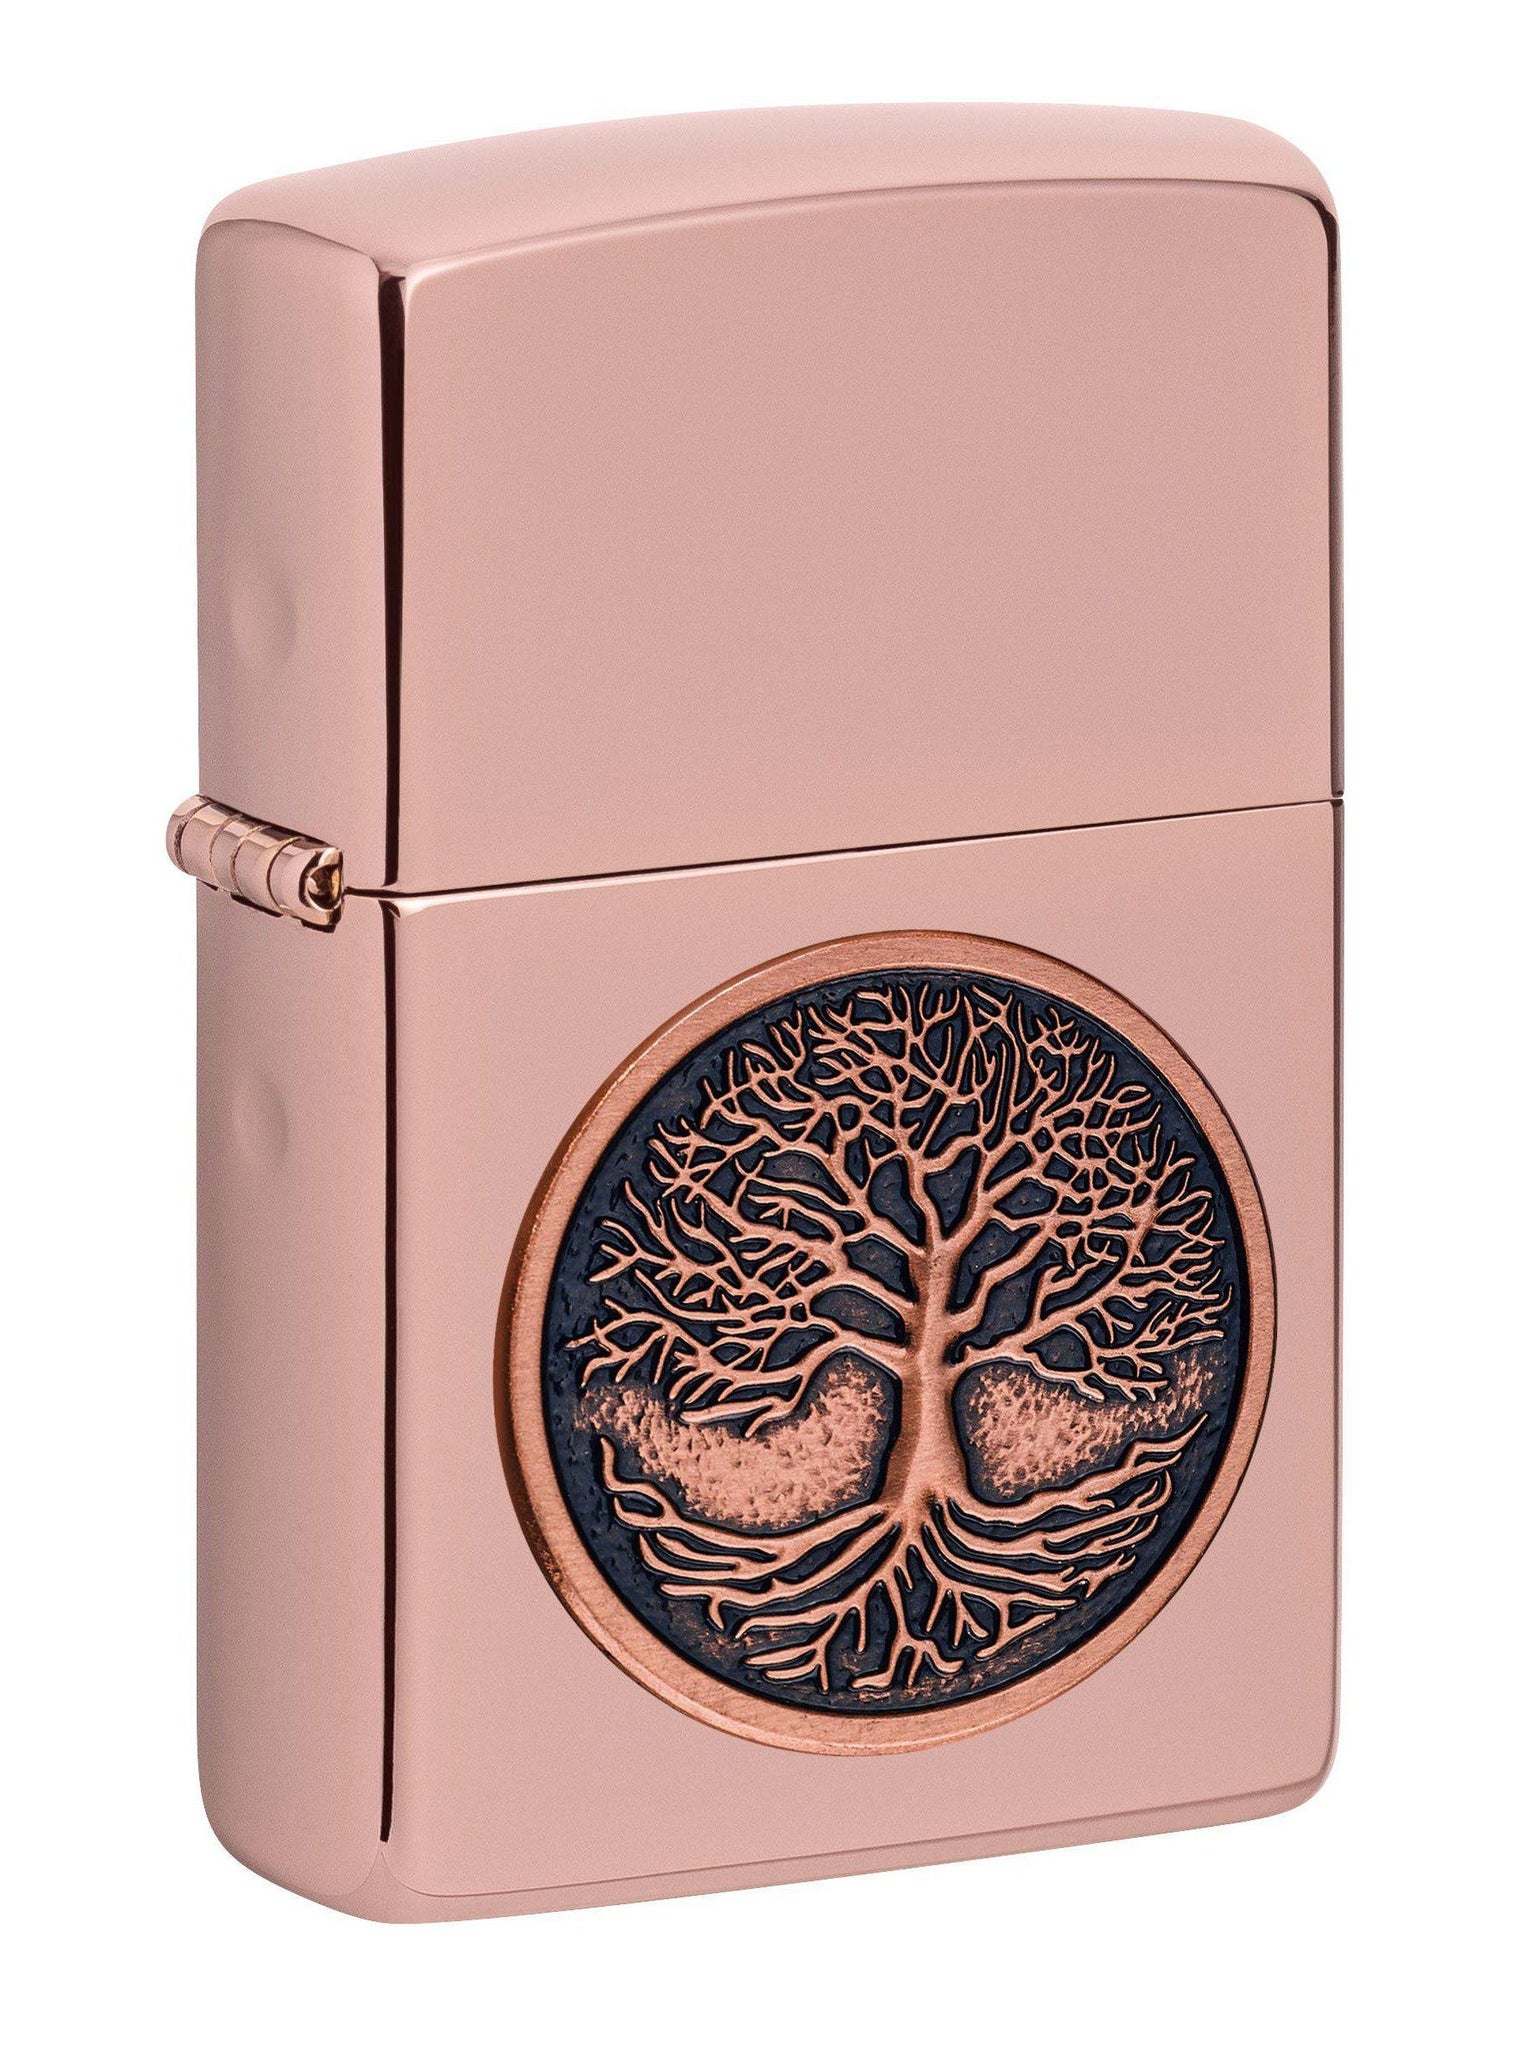 Zippo Lighter: Tree of Life Emblem - Rose Gold 49638